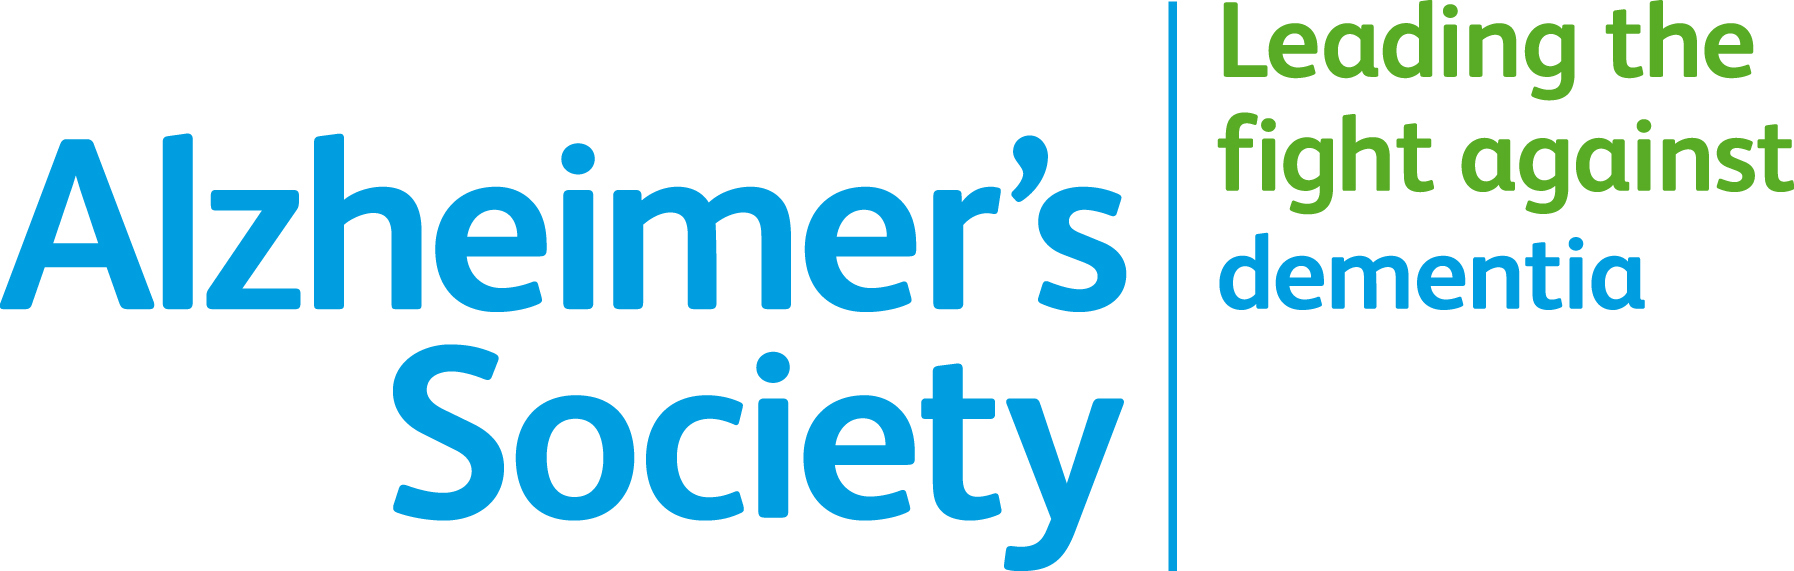 Alzheimer's Society Logo - leading the fight against dementia